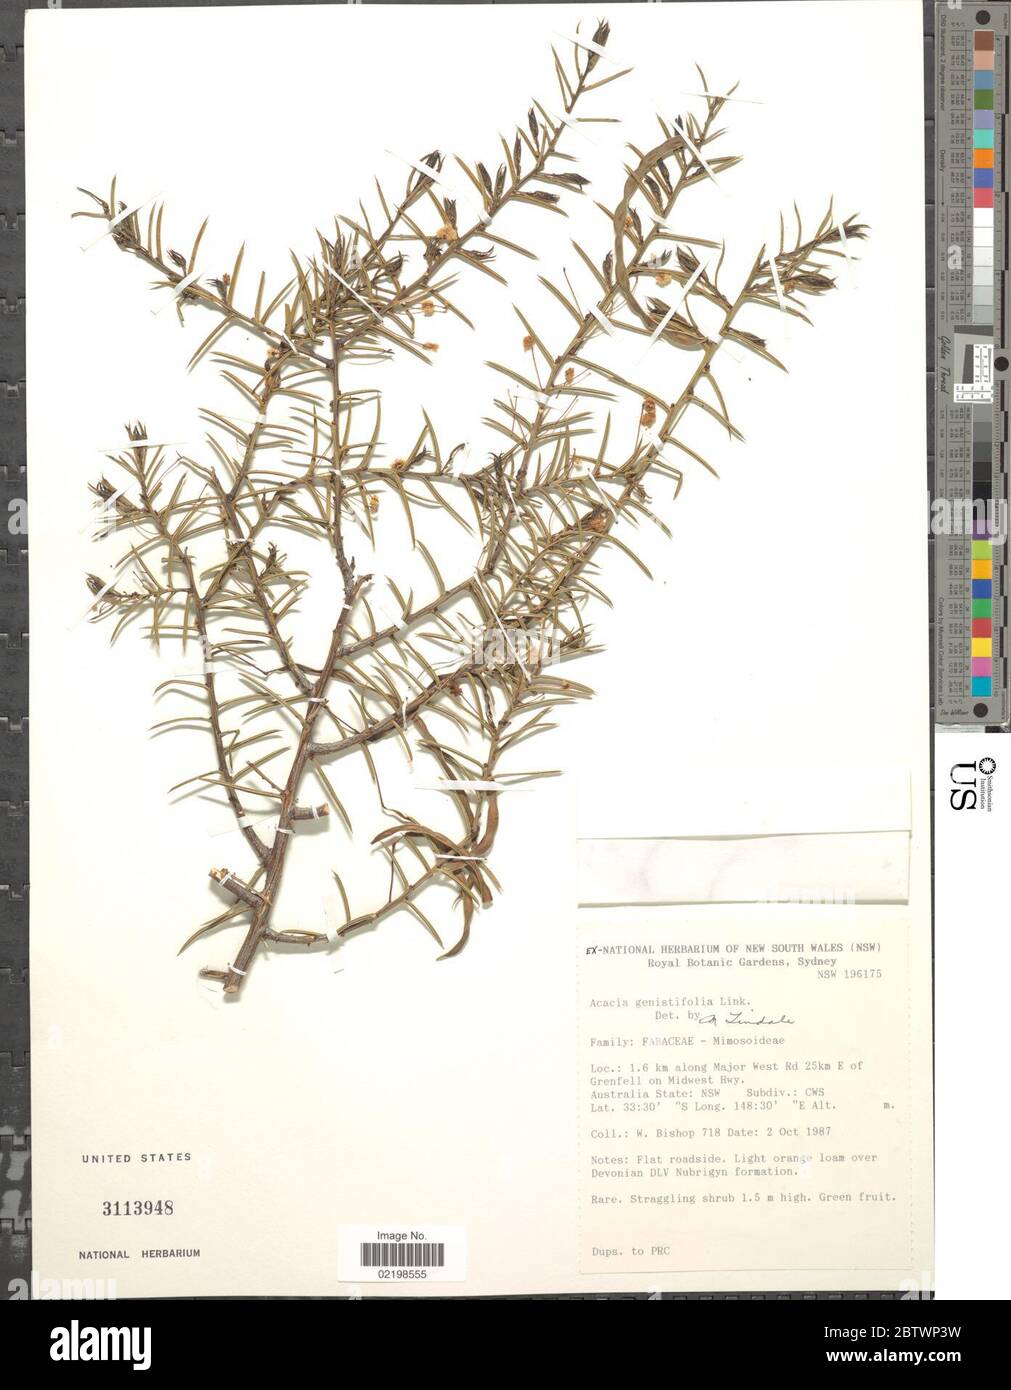 Acacia genistifolia Link. Stock Photo